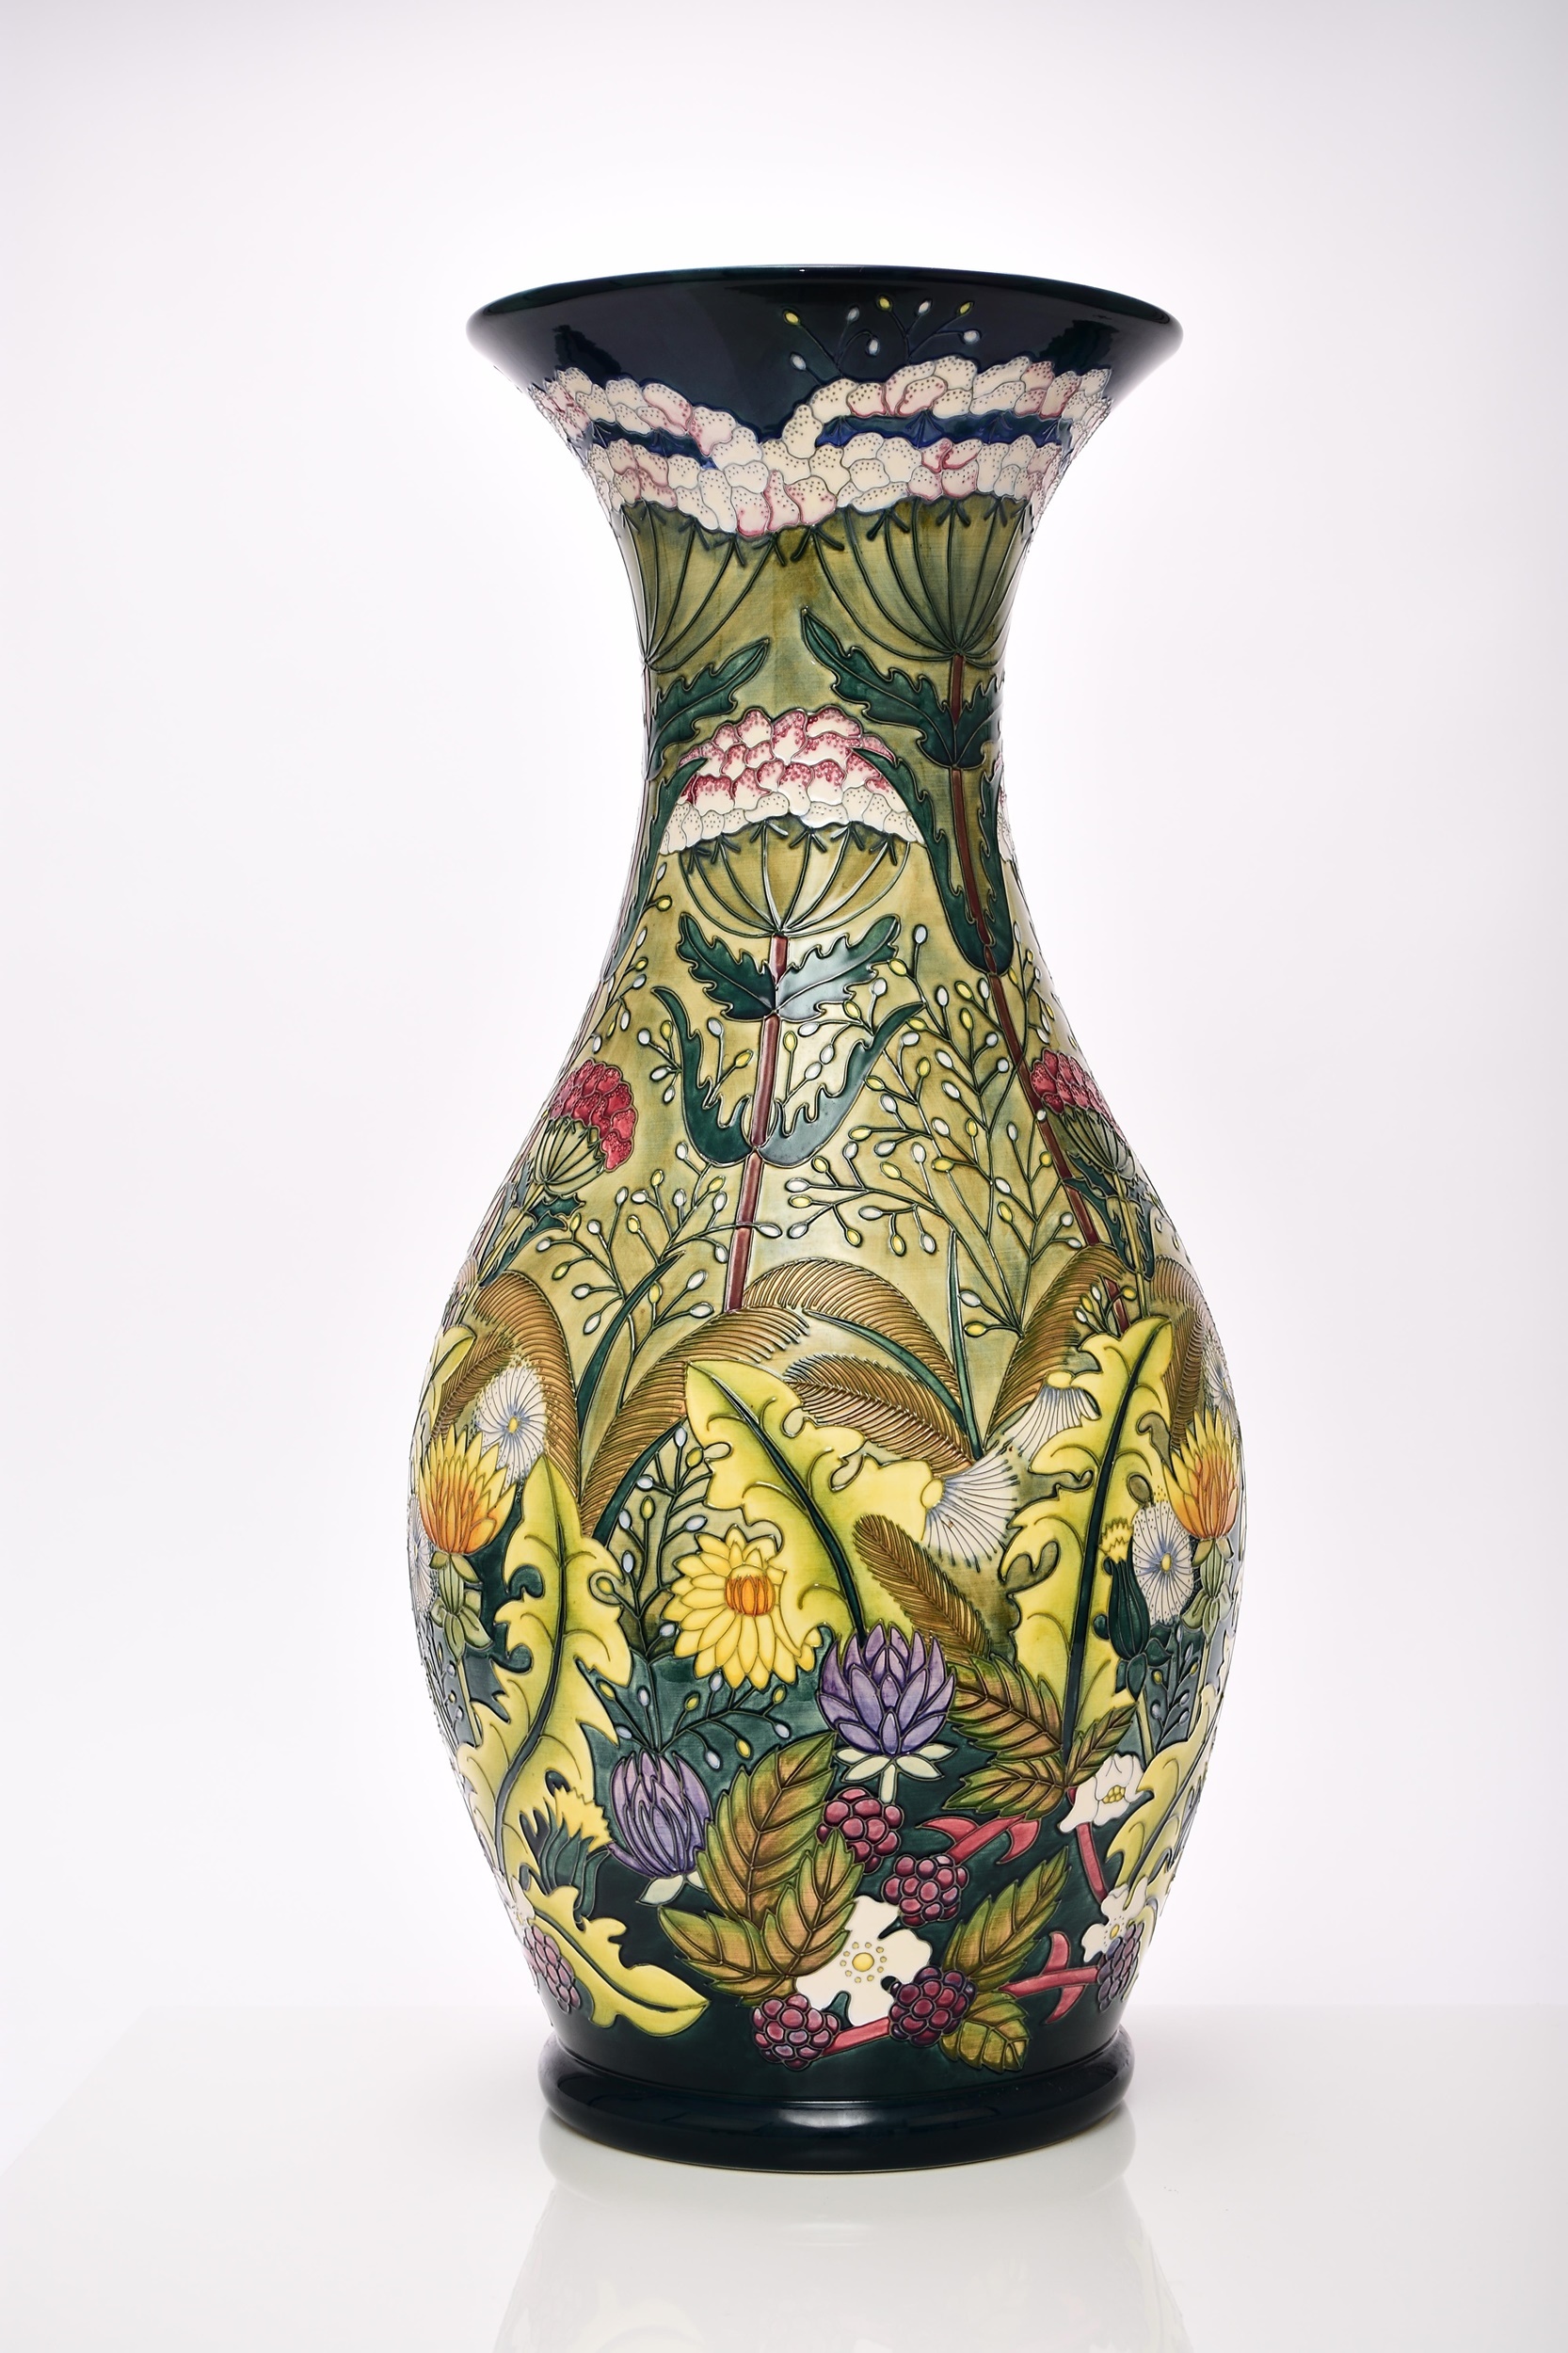 A large Moorcroft floor-standing vase in the Ryden Lane pattern